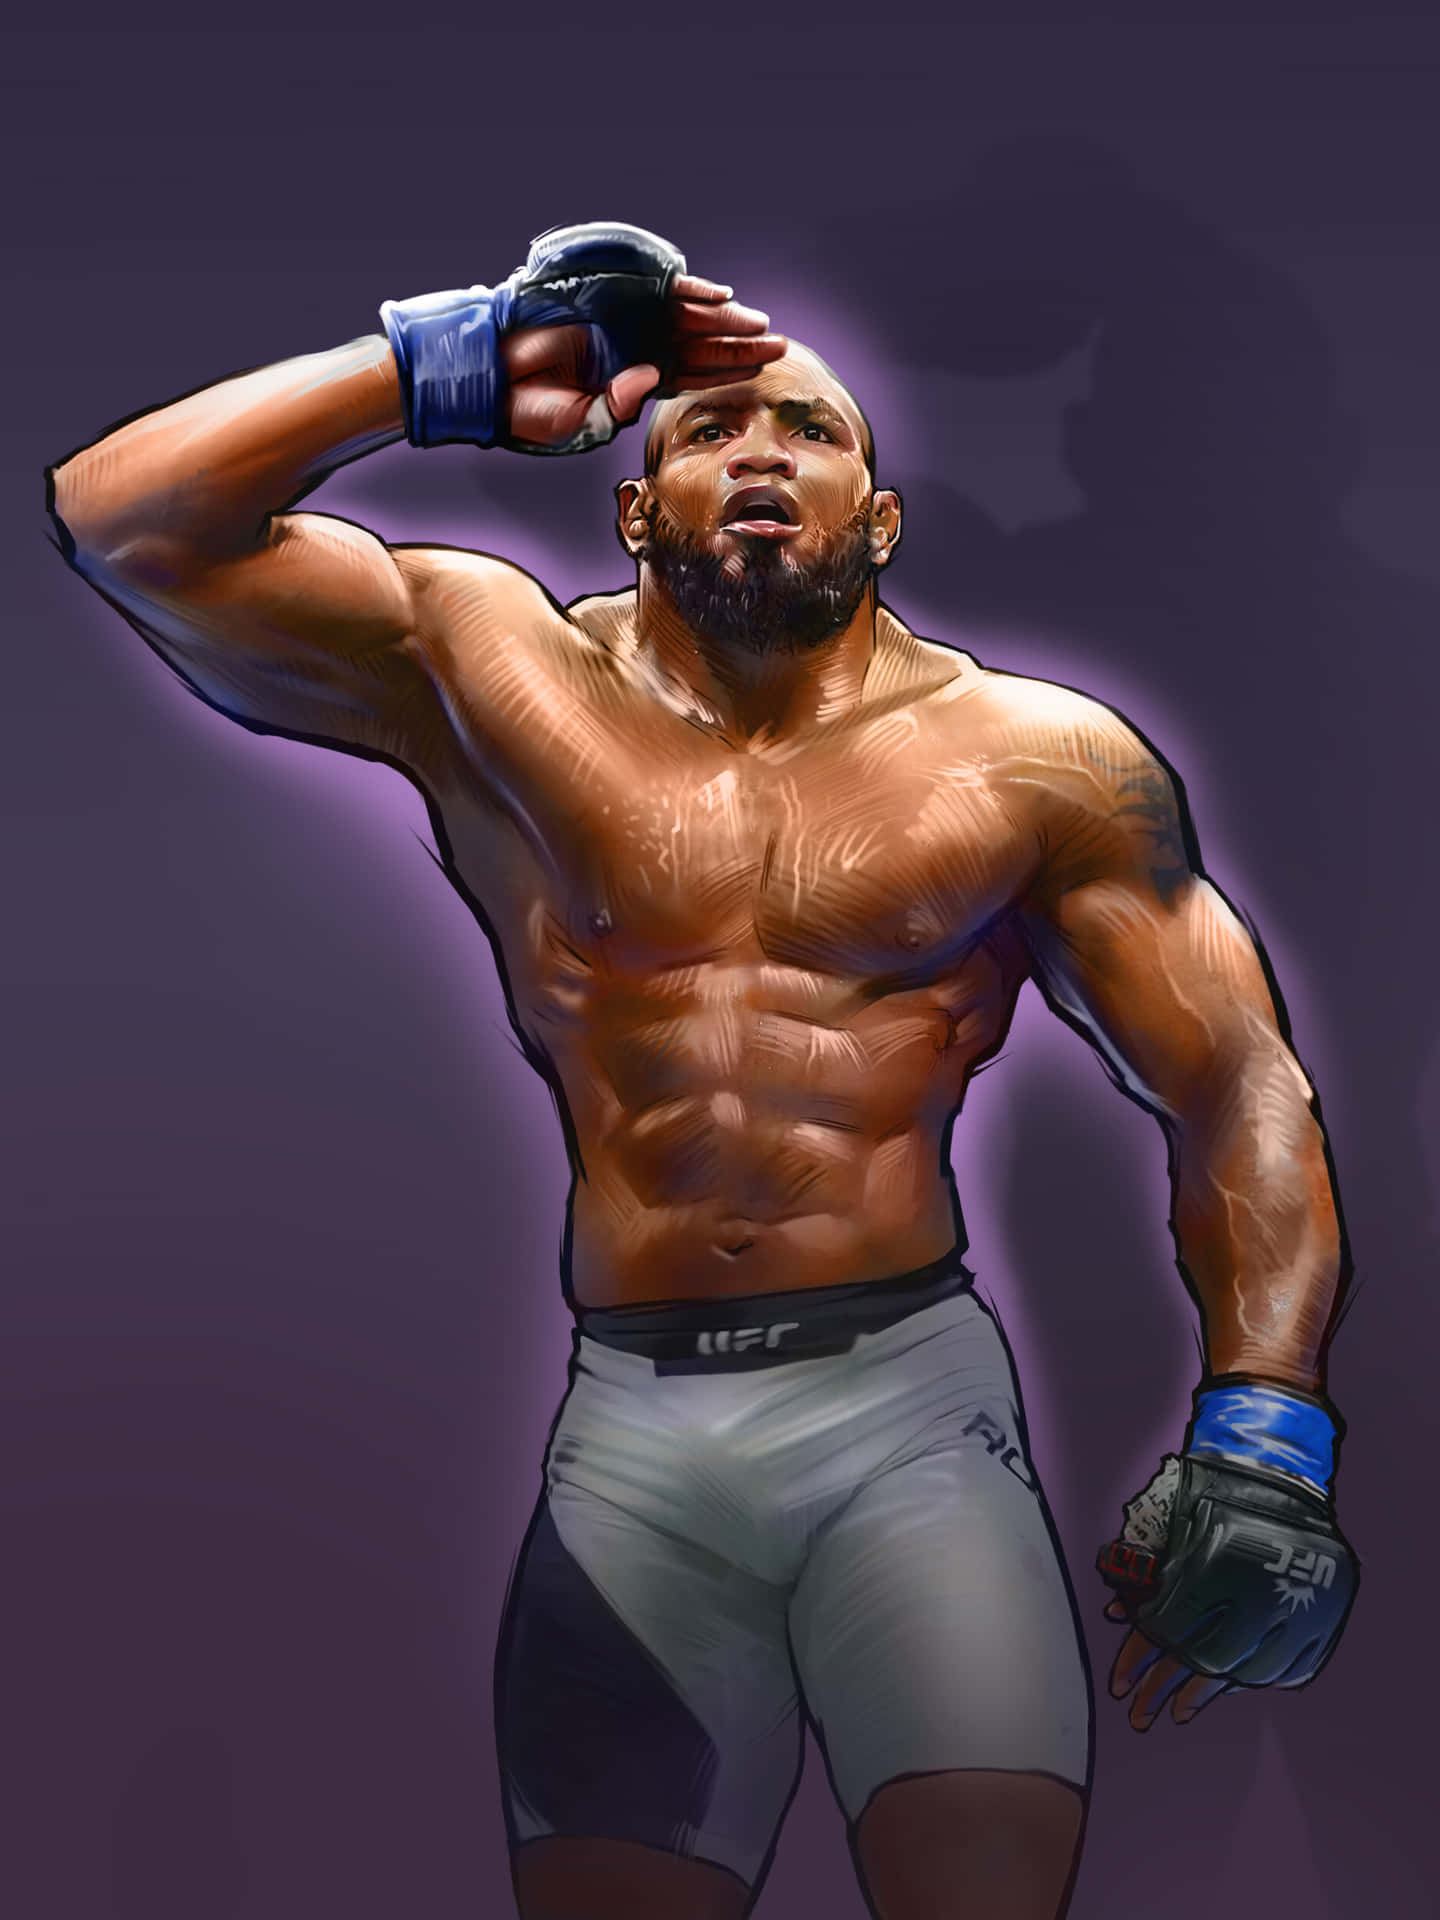 Cuban Mixed Martial Artist Yoel Romero Digital Art Wallpaper